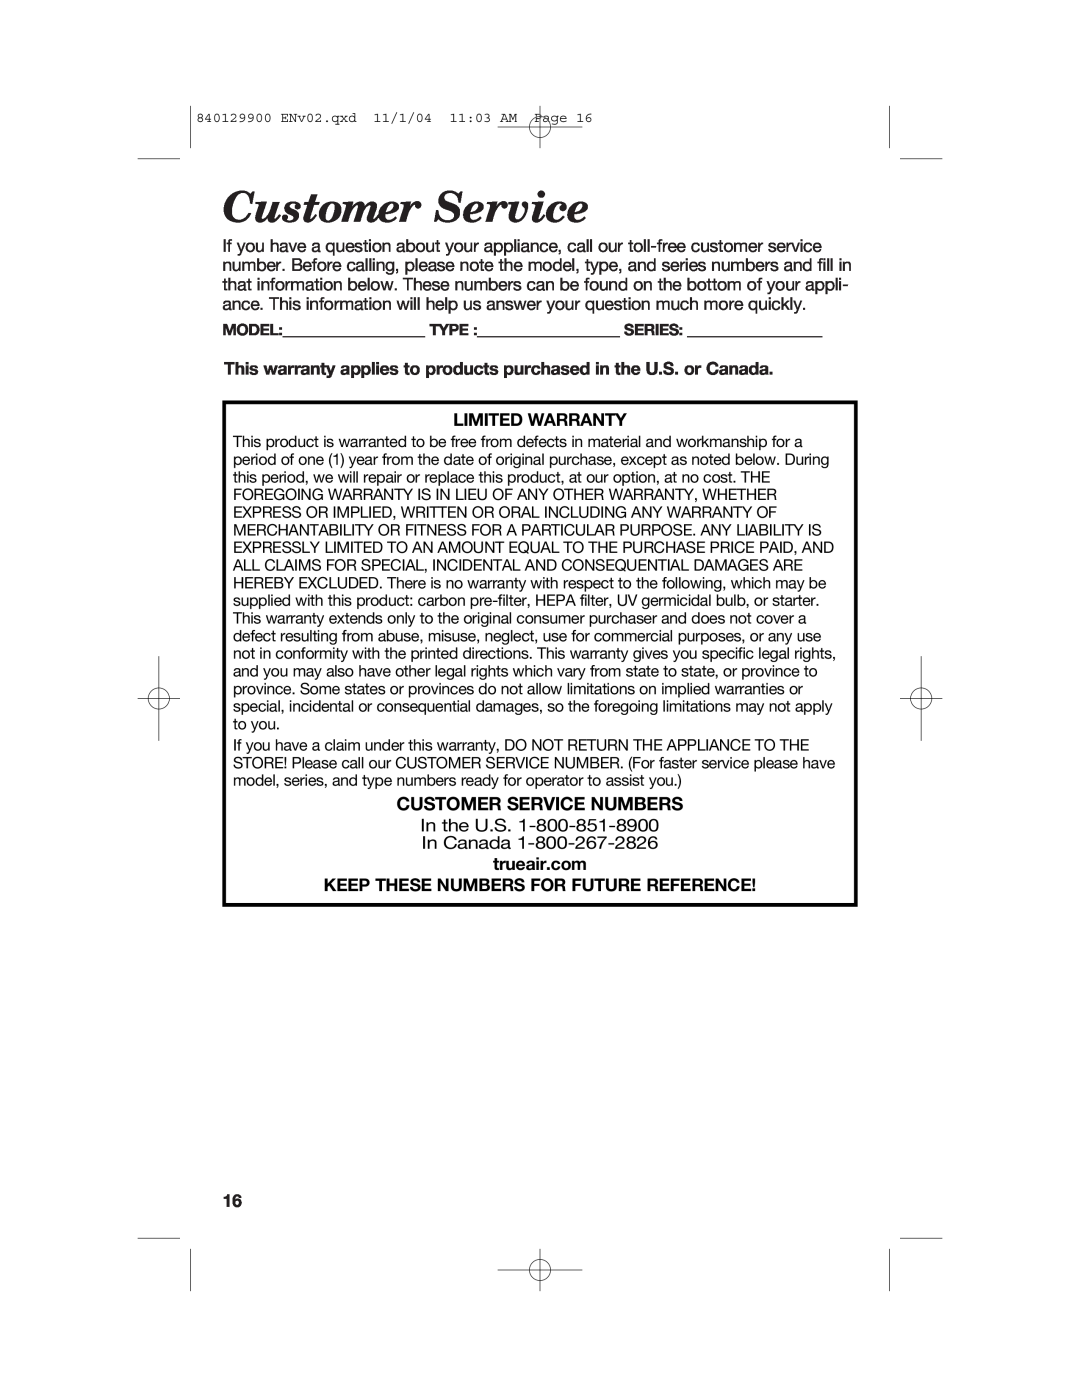 Hamilton Beach 04160, 04162, 04161 manual Customer Service Numbers 